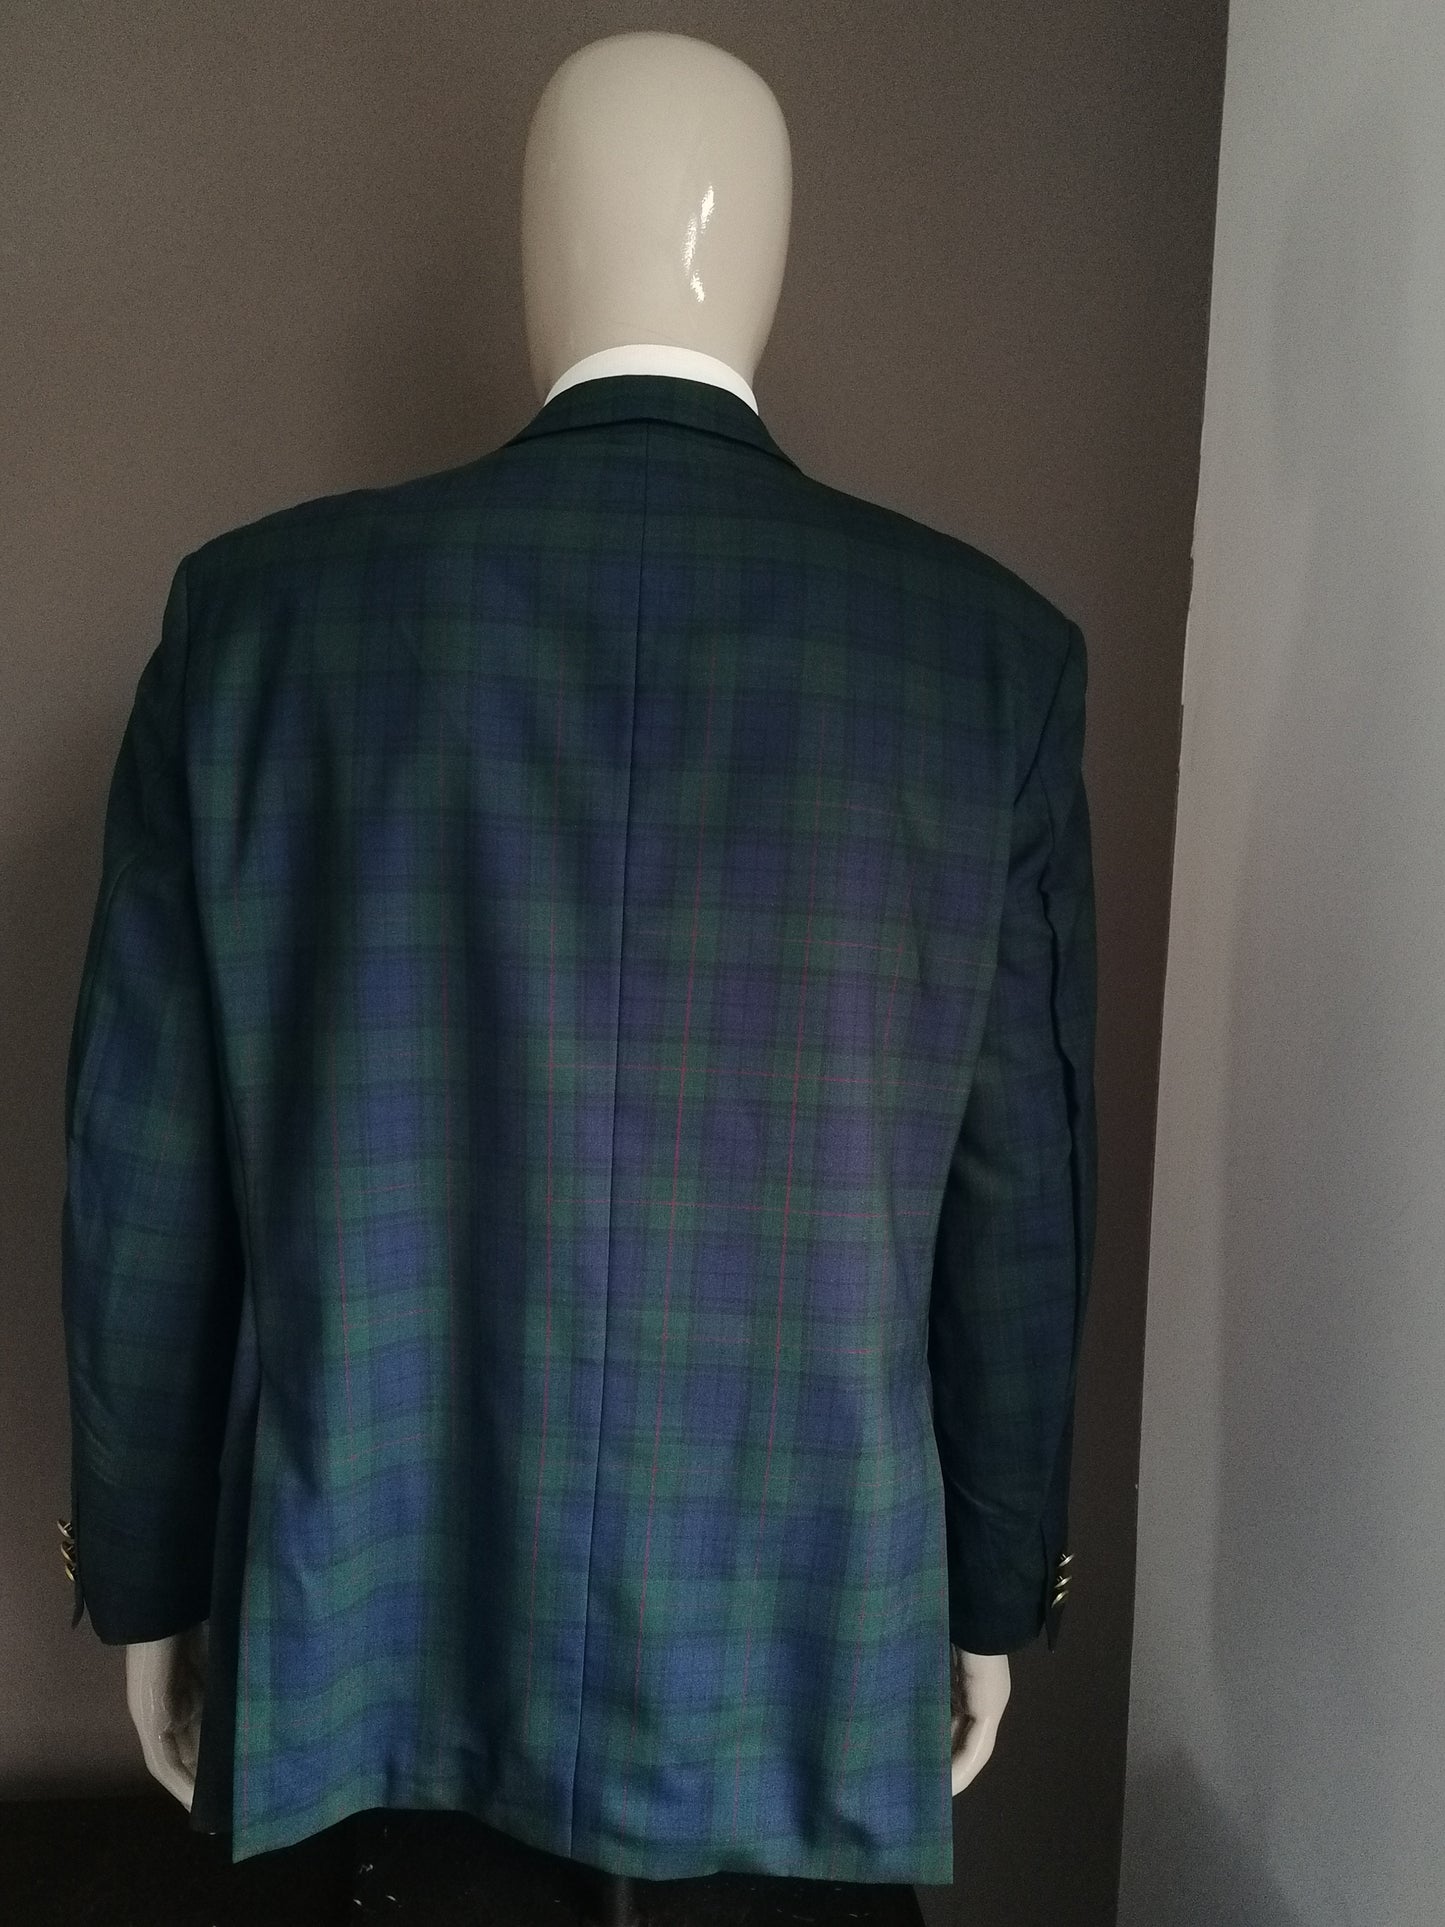 Pohland Wool Transhipment / Double Breaded Jacket. Red azul verde revisado. Tamaño 28 / (56 / xl)